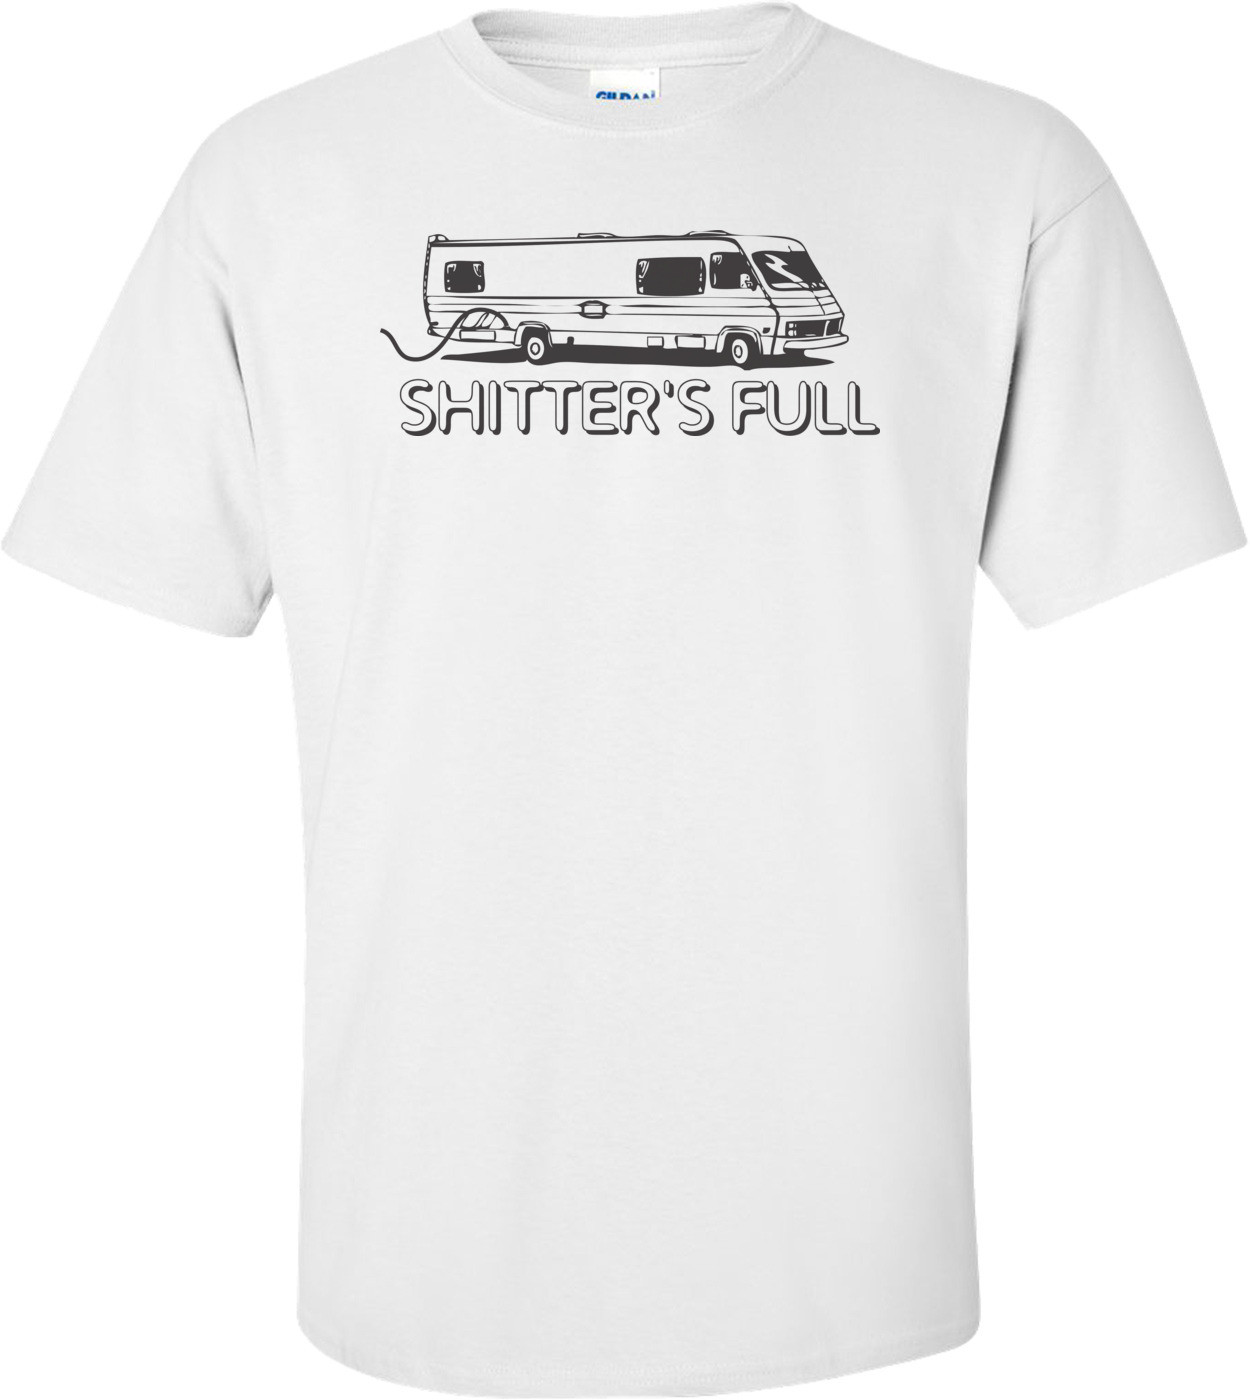 Shitter's Full - Christmas Vacation - 80's T-shirt